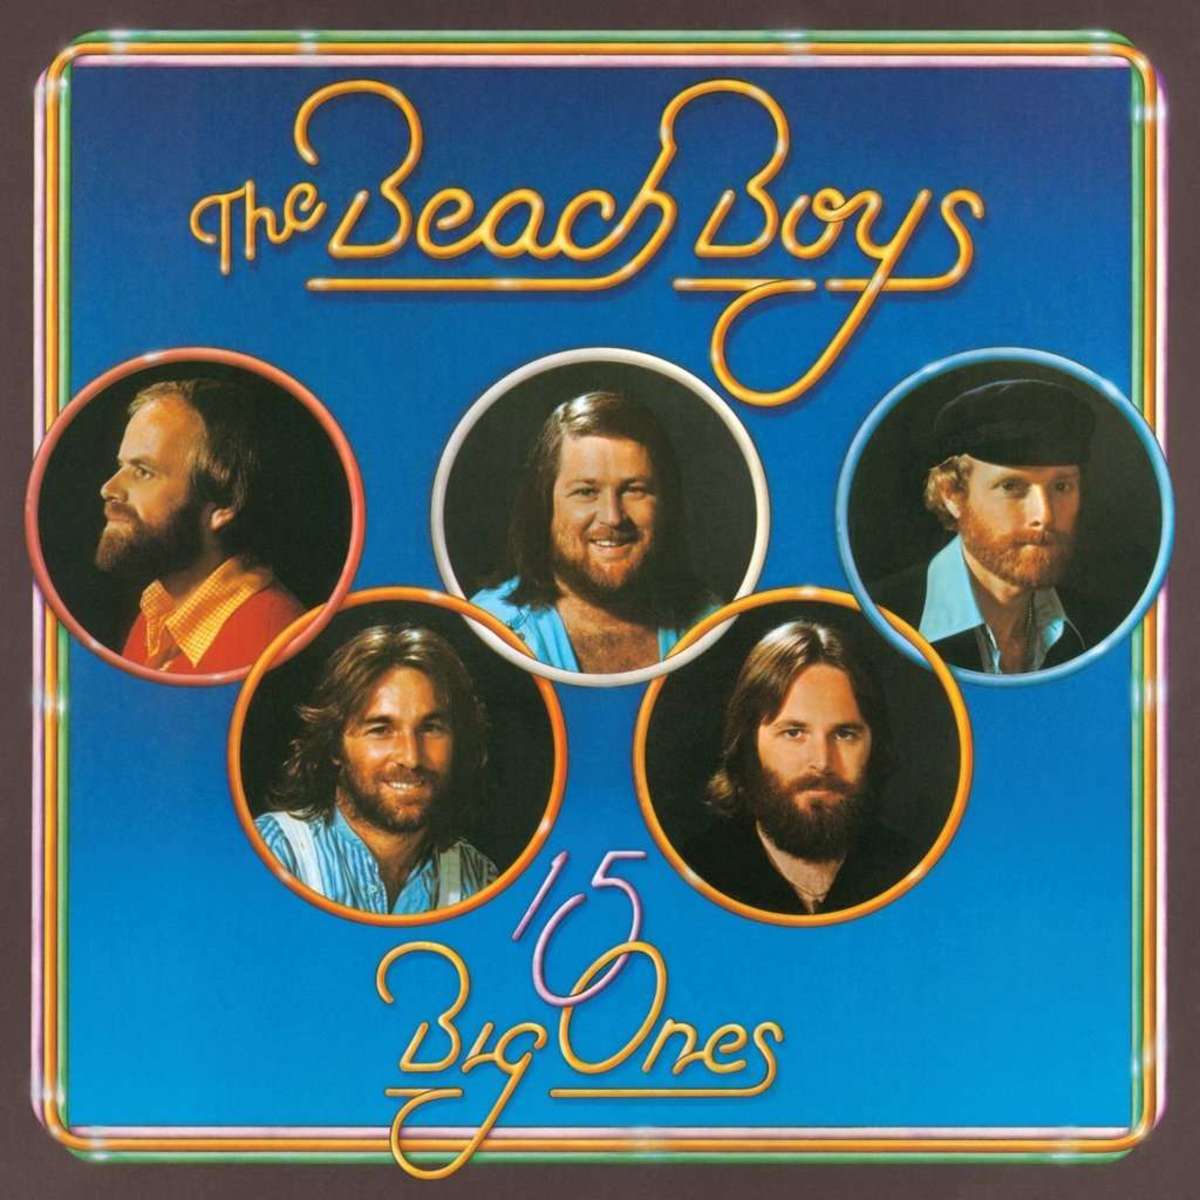 The Beach Boys, "15 Big Ones"